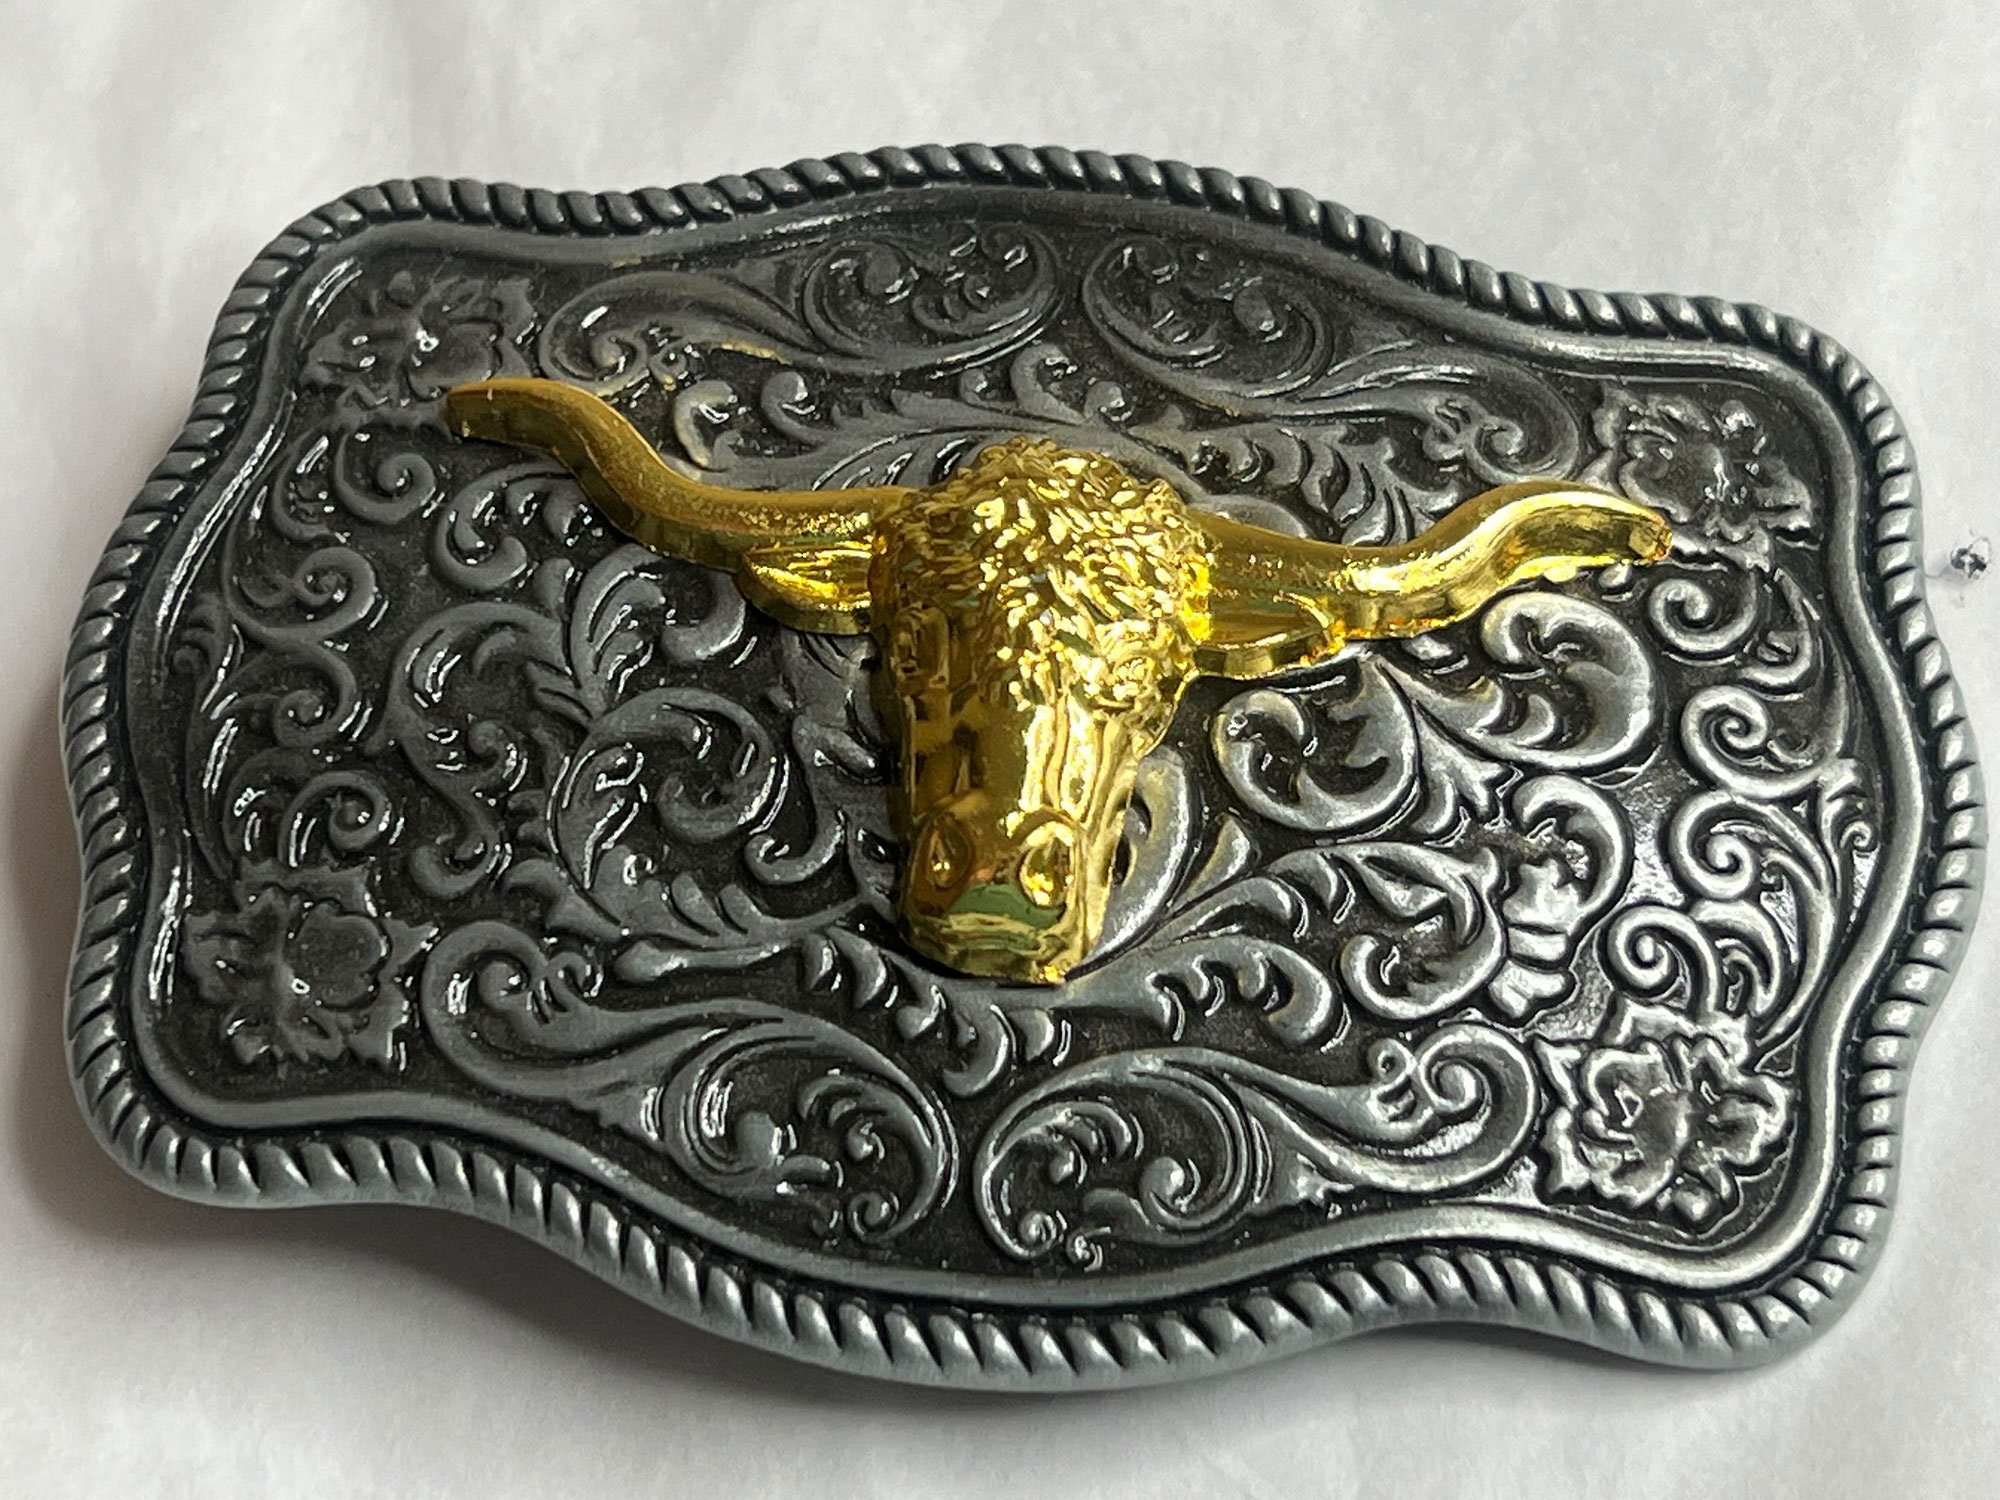 Bourgeon transactie Proficiat Highland Cattle Steer Bull Metal Belt Buckle Gold & Silver - Etsy